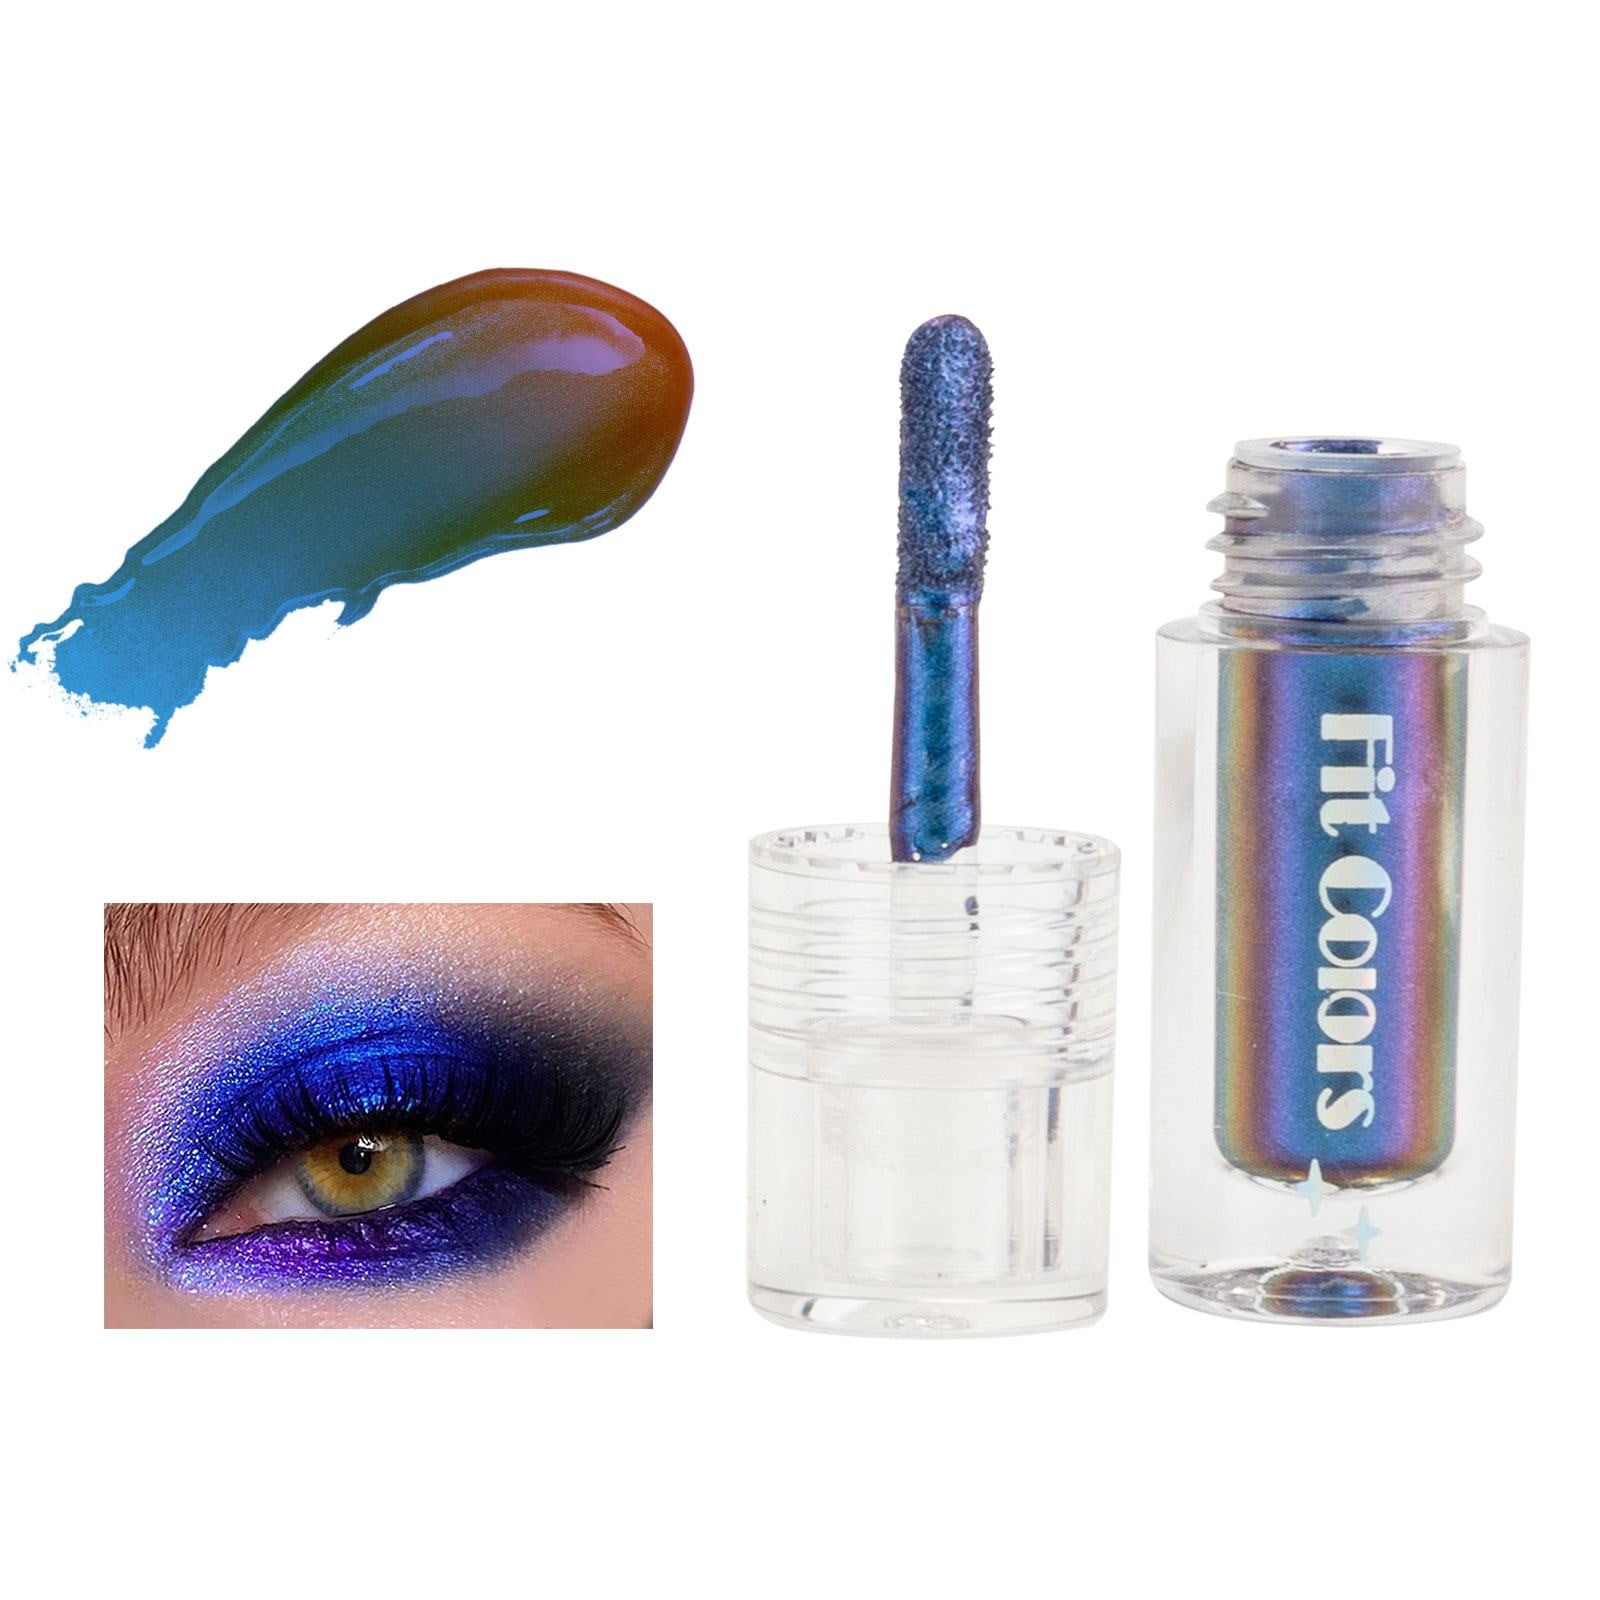 AC-KL261MIX Disco Drops Liquid Glitter Highlighter : 1 DZ – Cosmeticholic